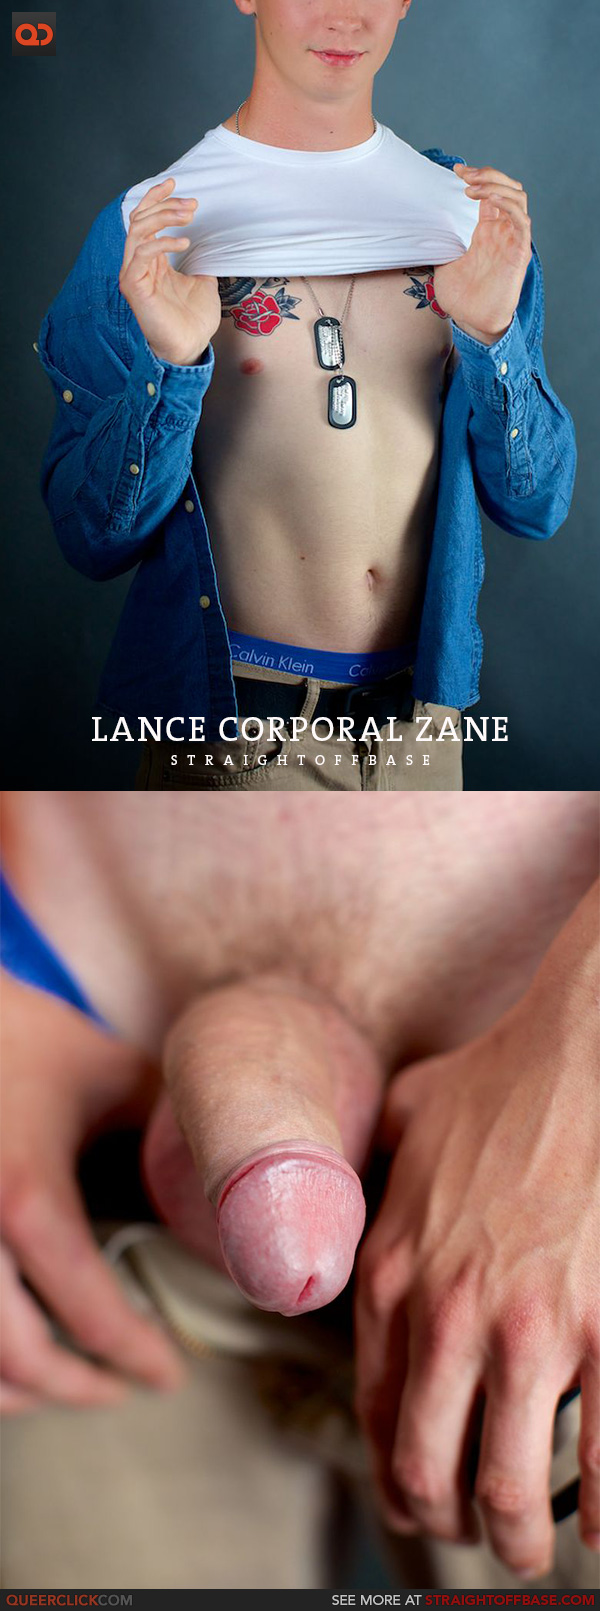 Straight Off Base: Lance Corporal Zane